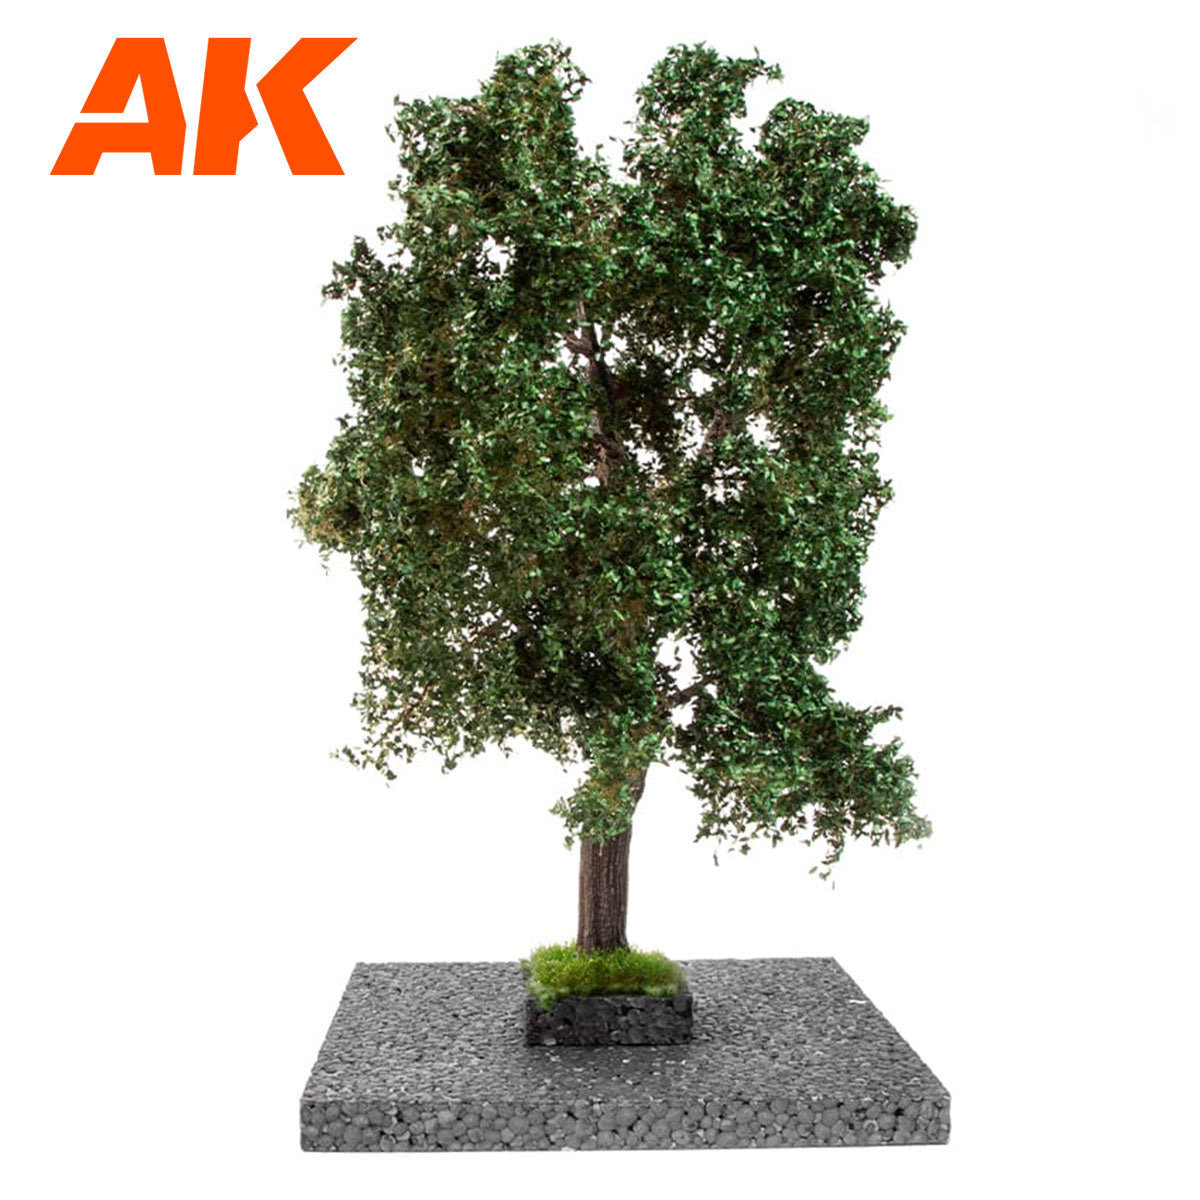 AK8192 - Oak Summer Tree 1:35 and 1:32